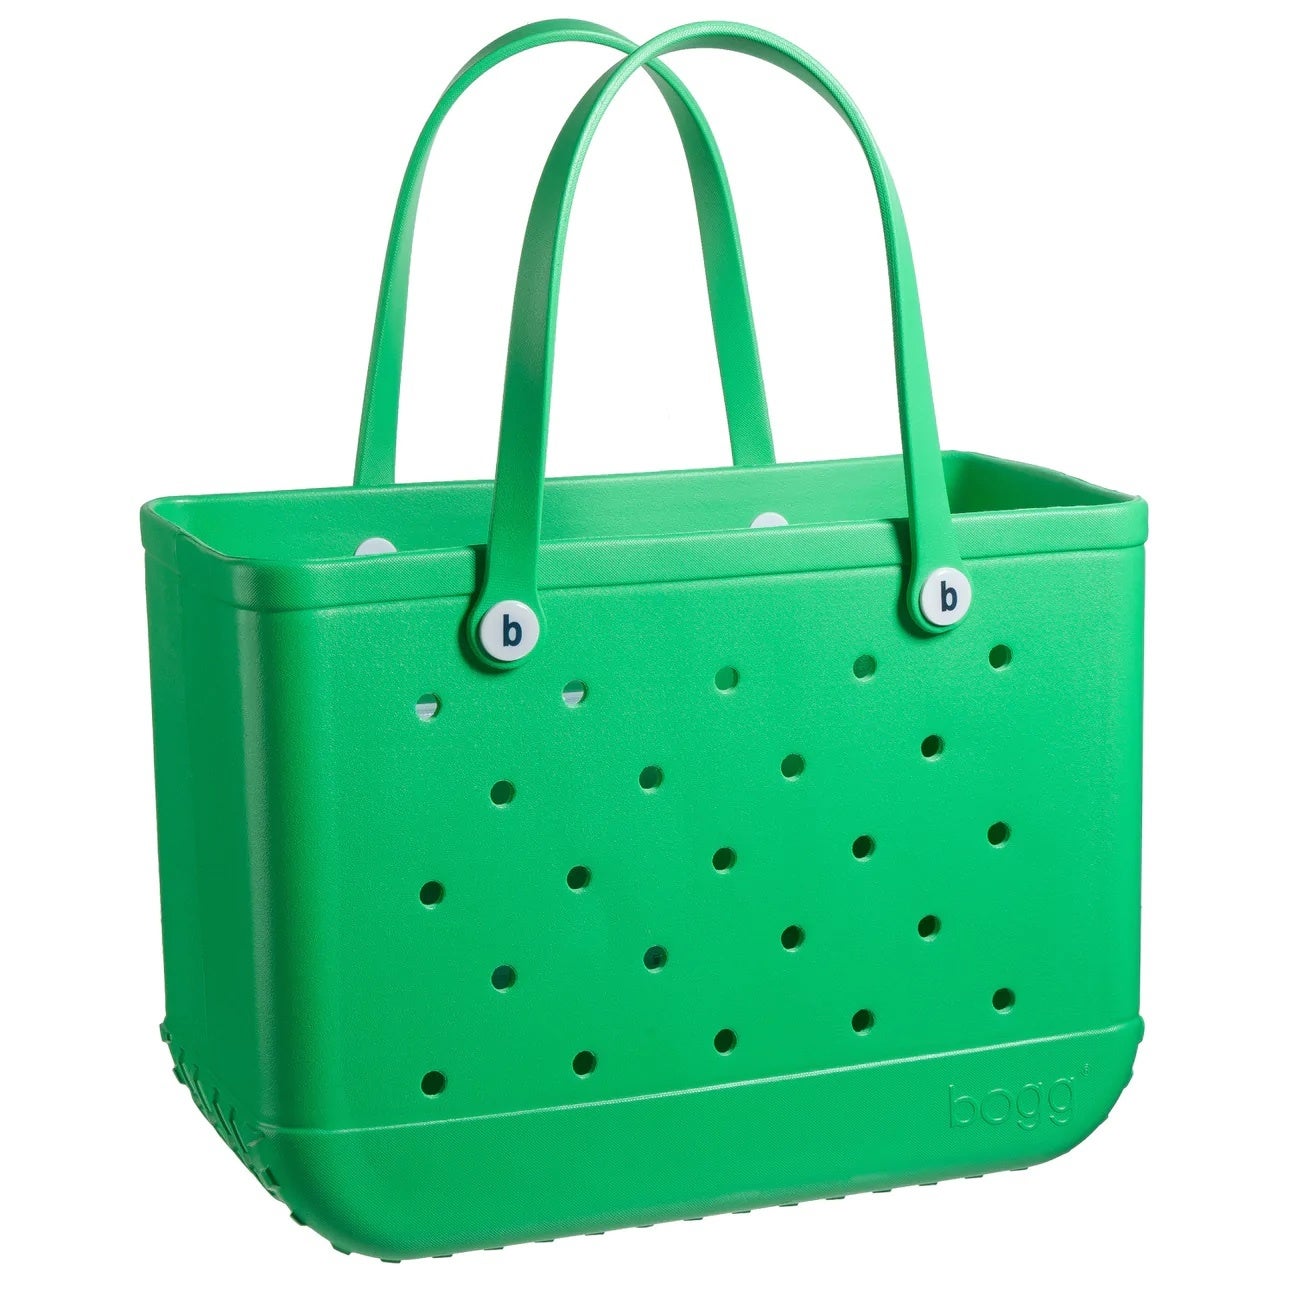 Bogg Bag - Original Tote - Green with Envy